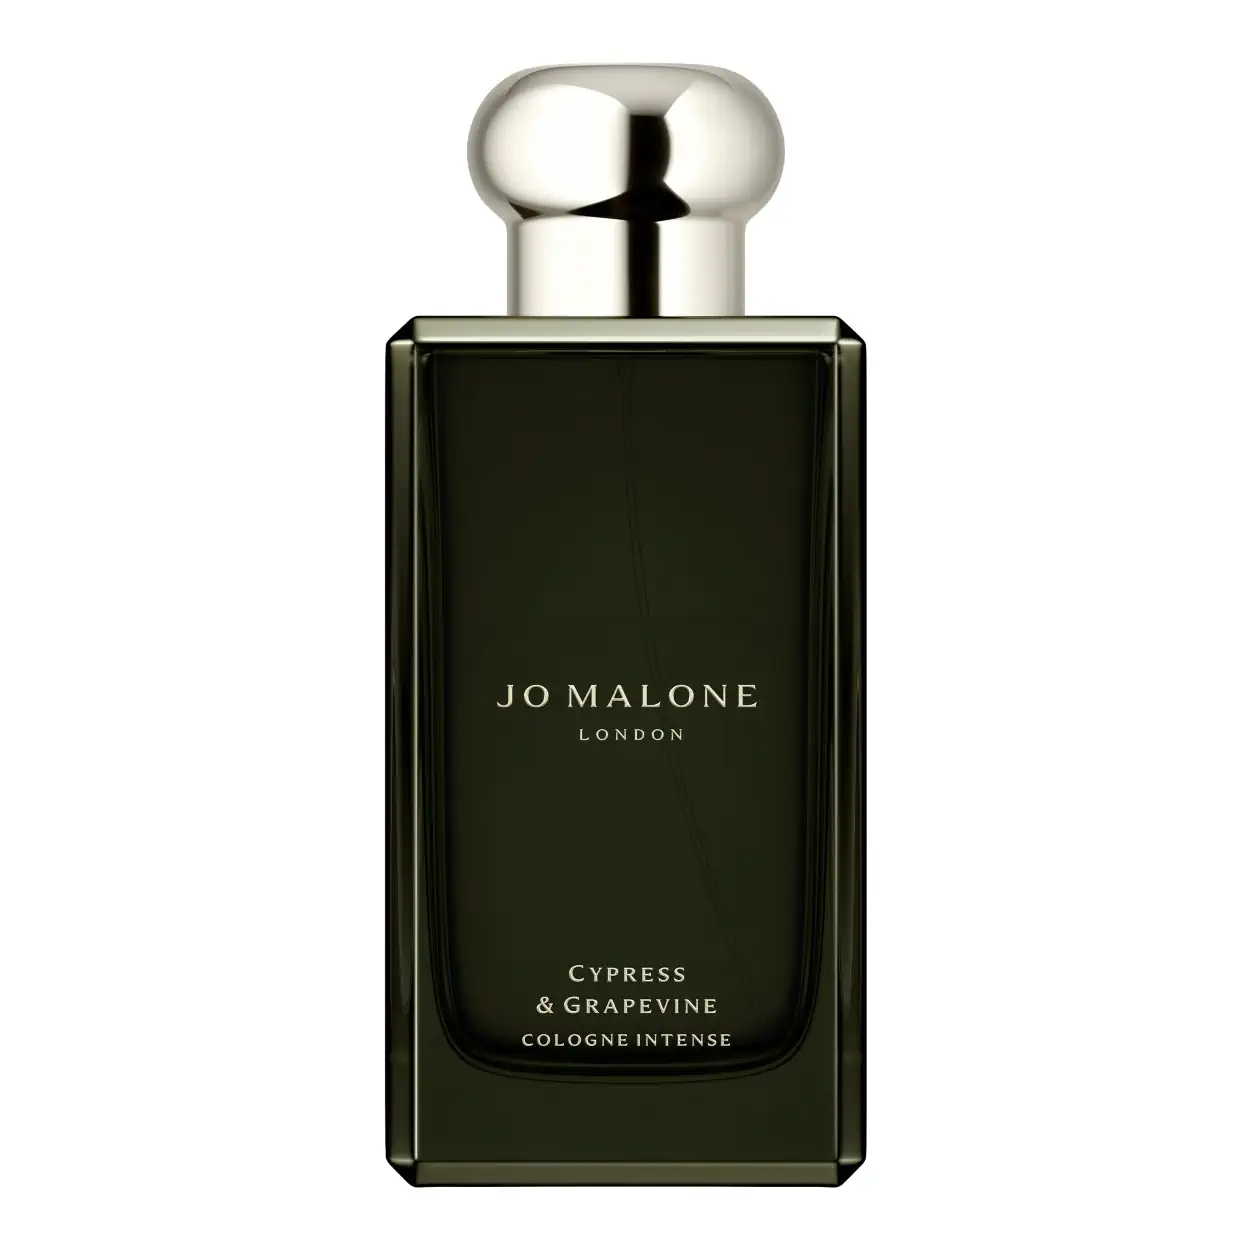 Tom Hardy embodies the essence of London as Jo Malone's Cypress & Grapevine ambassador